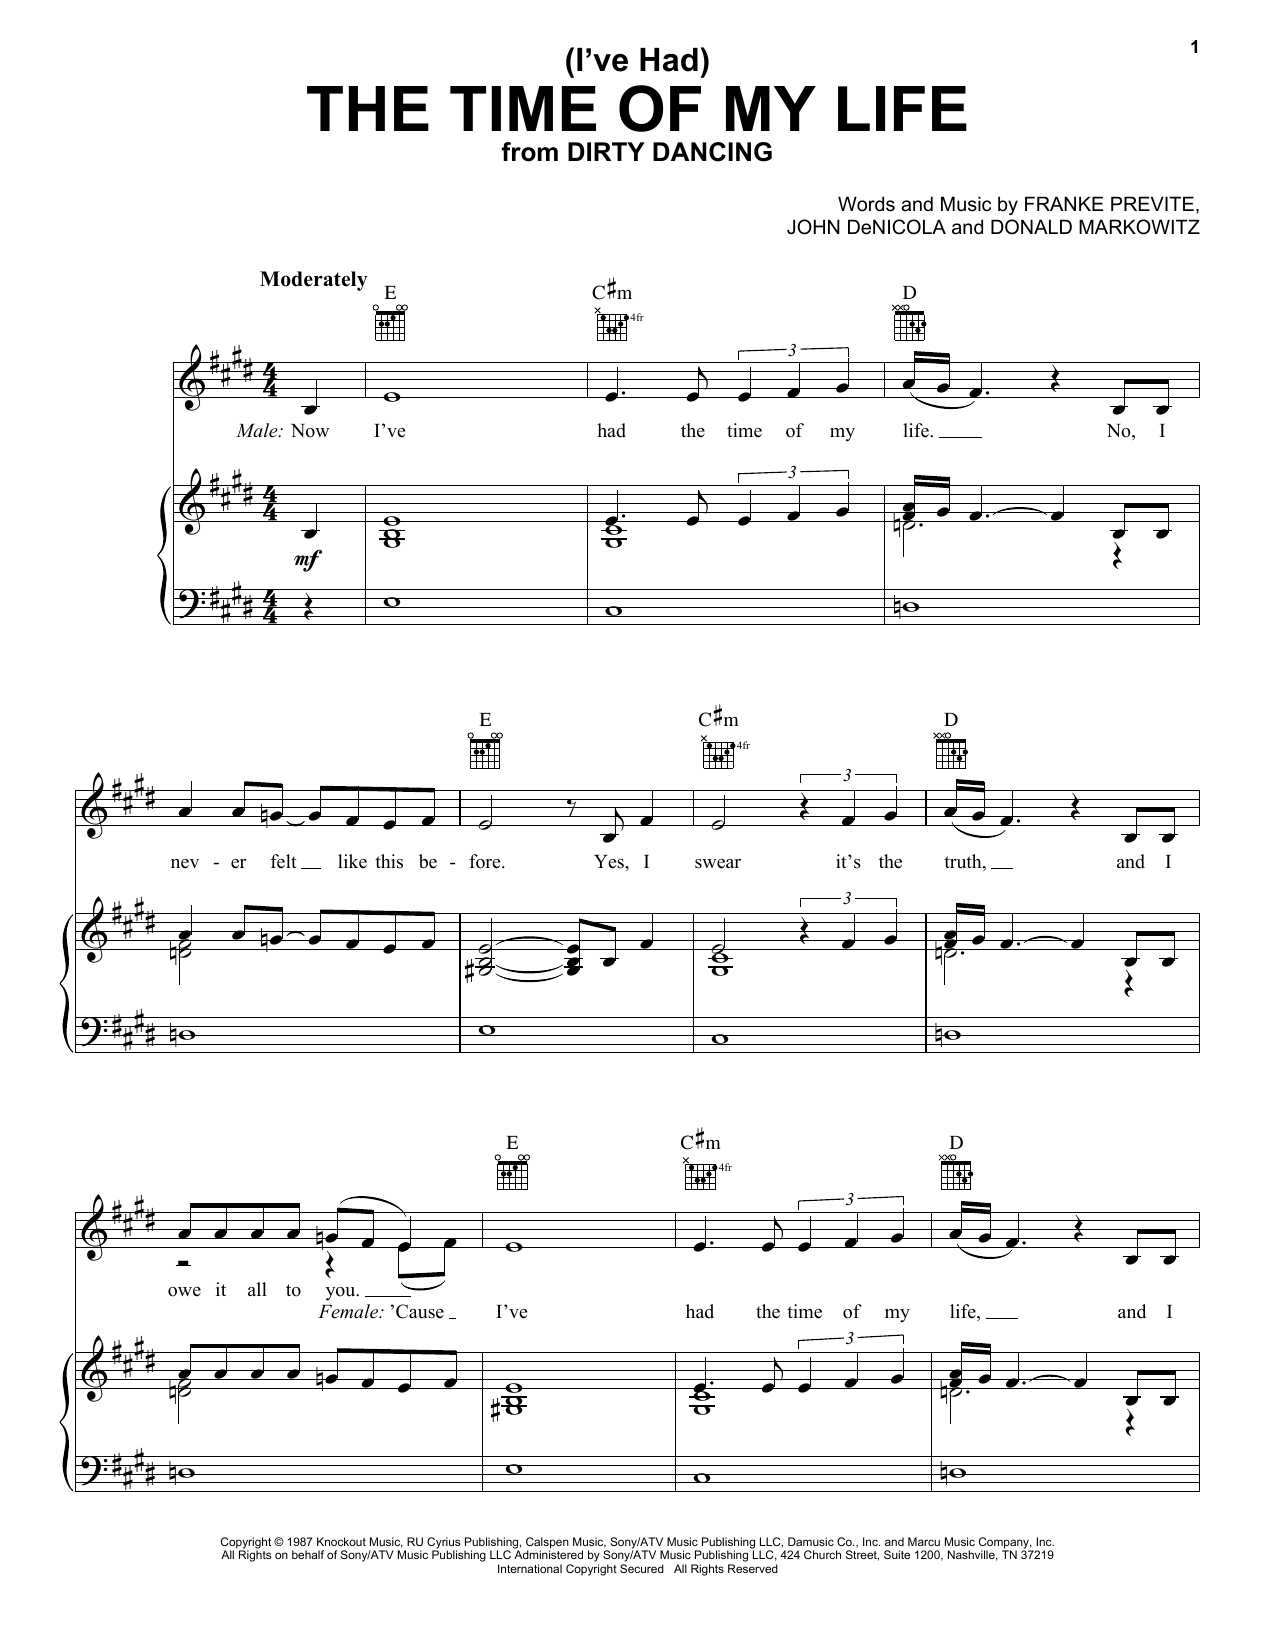 Bill Medley & Jennifer Warnes (I've Had) The Time Of My Life Sheet Music Notes & Chords for Viola - Download or Print PDF